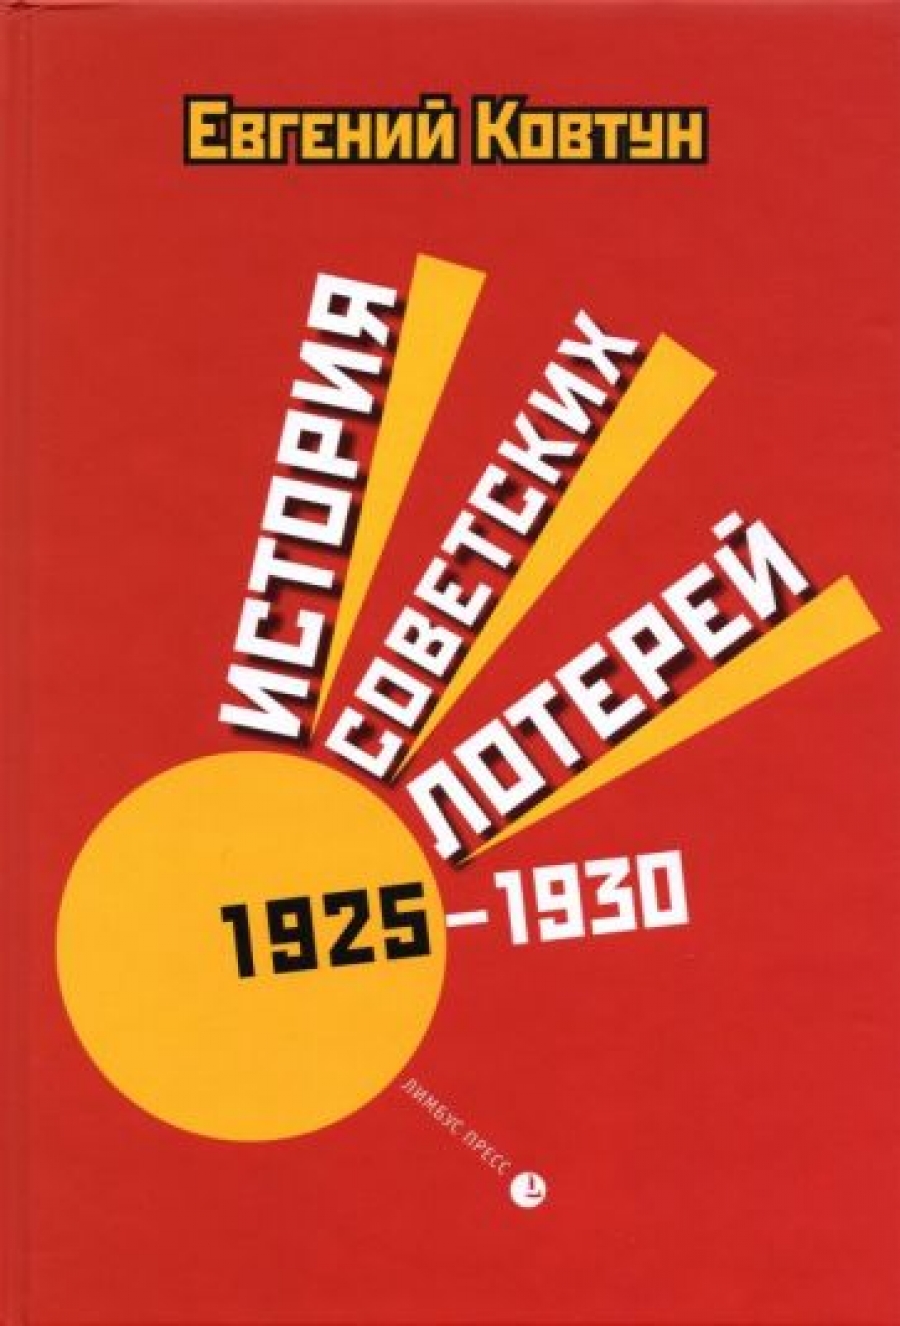 Ковтун Е.В. История советских лотерей (1925-1930 ) 